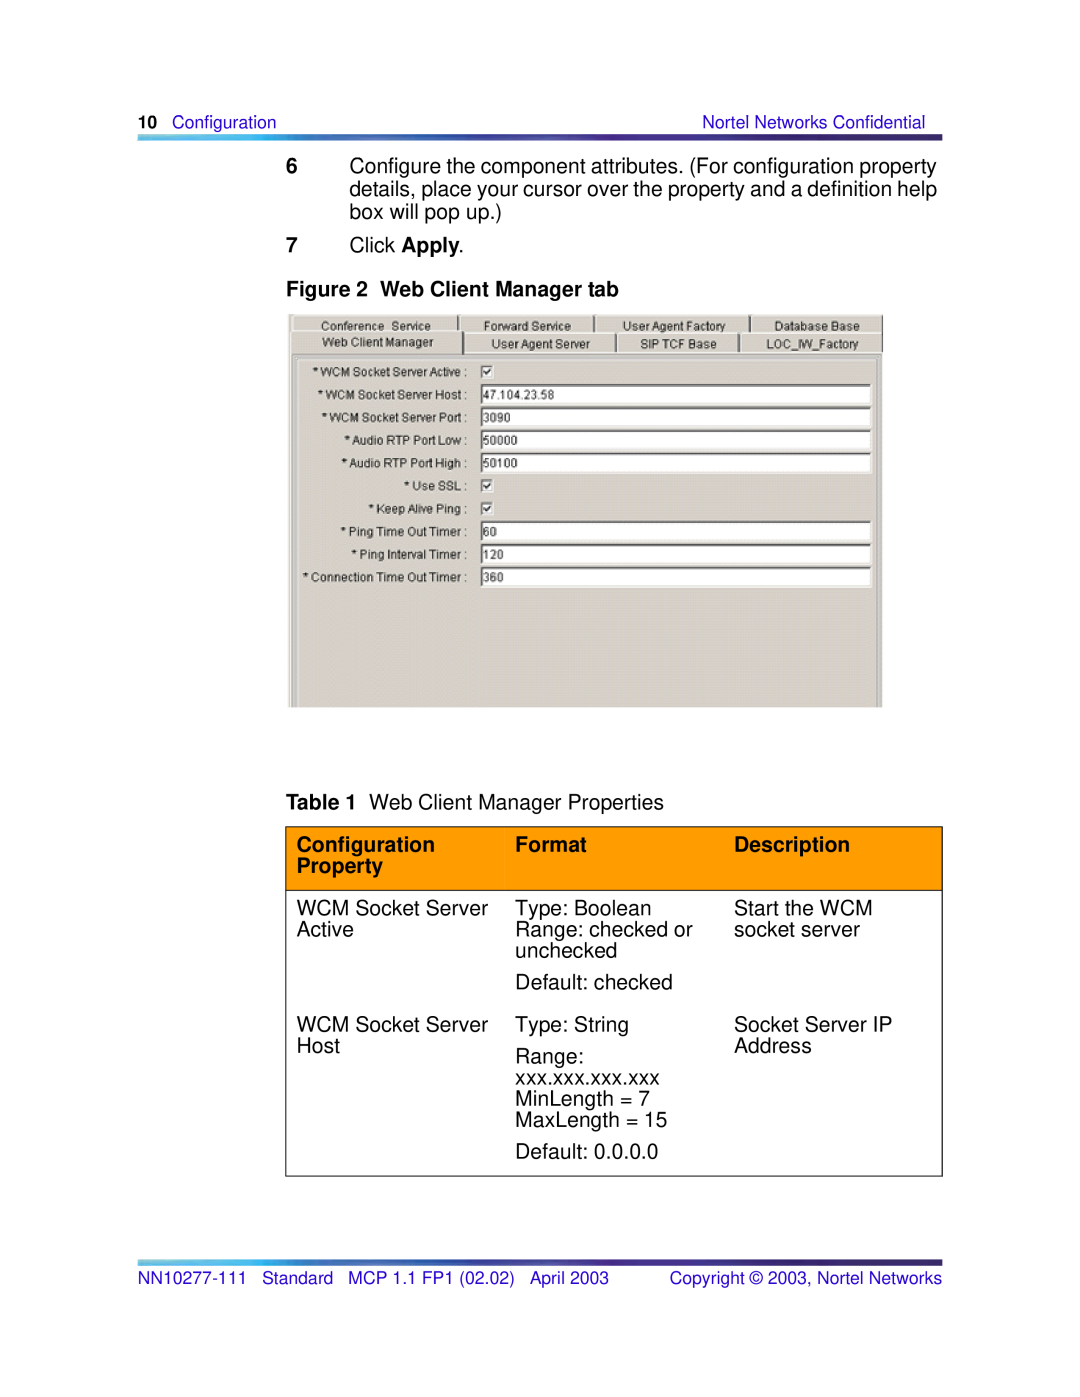 Nortel Networks NN10277-111 manual Web Client Manager tab, Configuration, Format, Description, Property 